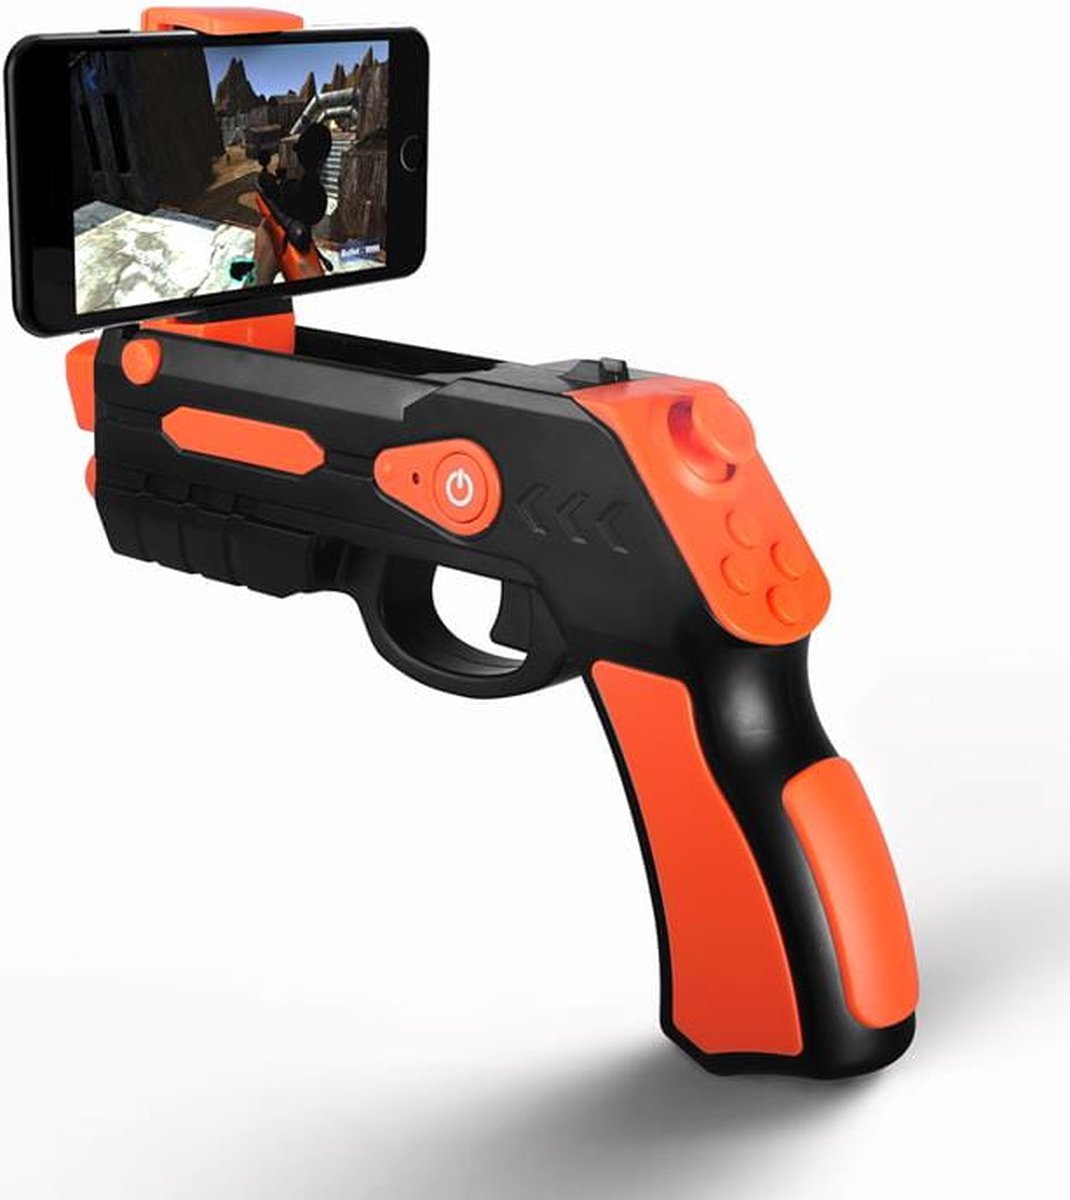 Omega OGVRARBO Controller voor smartphone - Gaming Gun Blaster - Zwart / Oranje